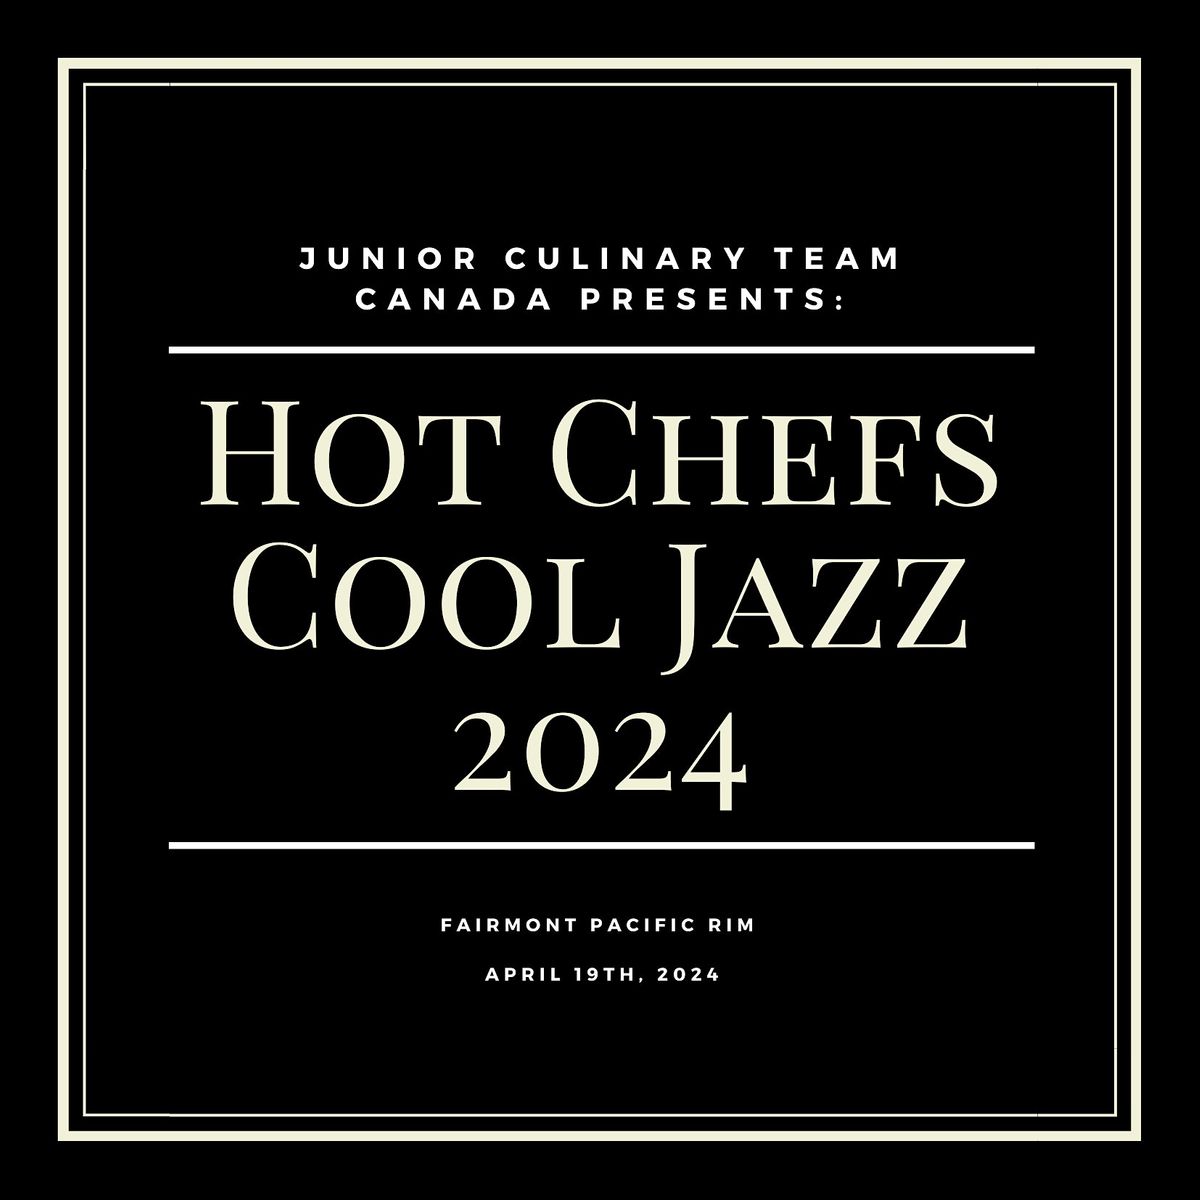 Hot Chefs & Cool Jazz Gala - April 19, 2024 - The Fairmont Pacific Rim